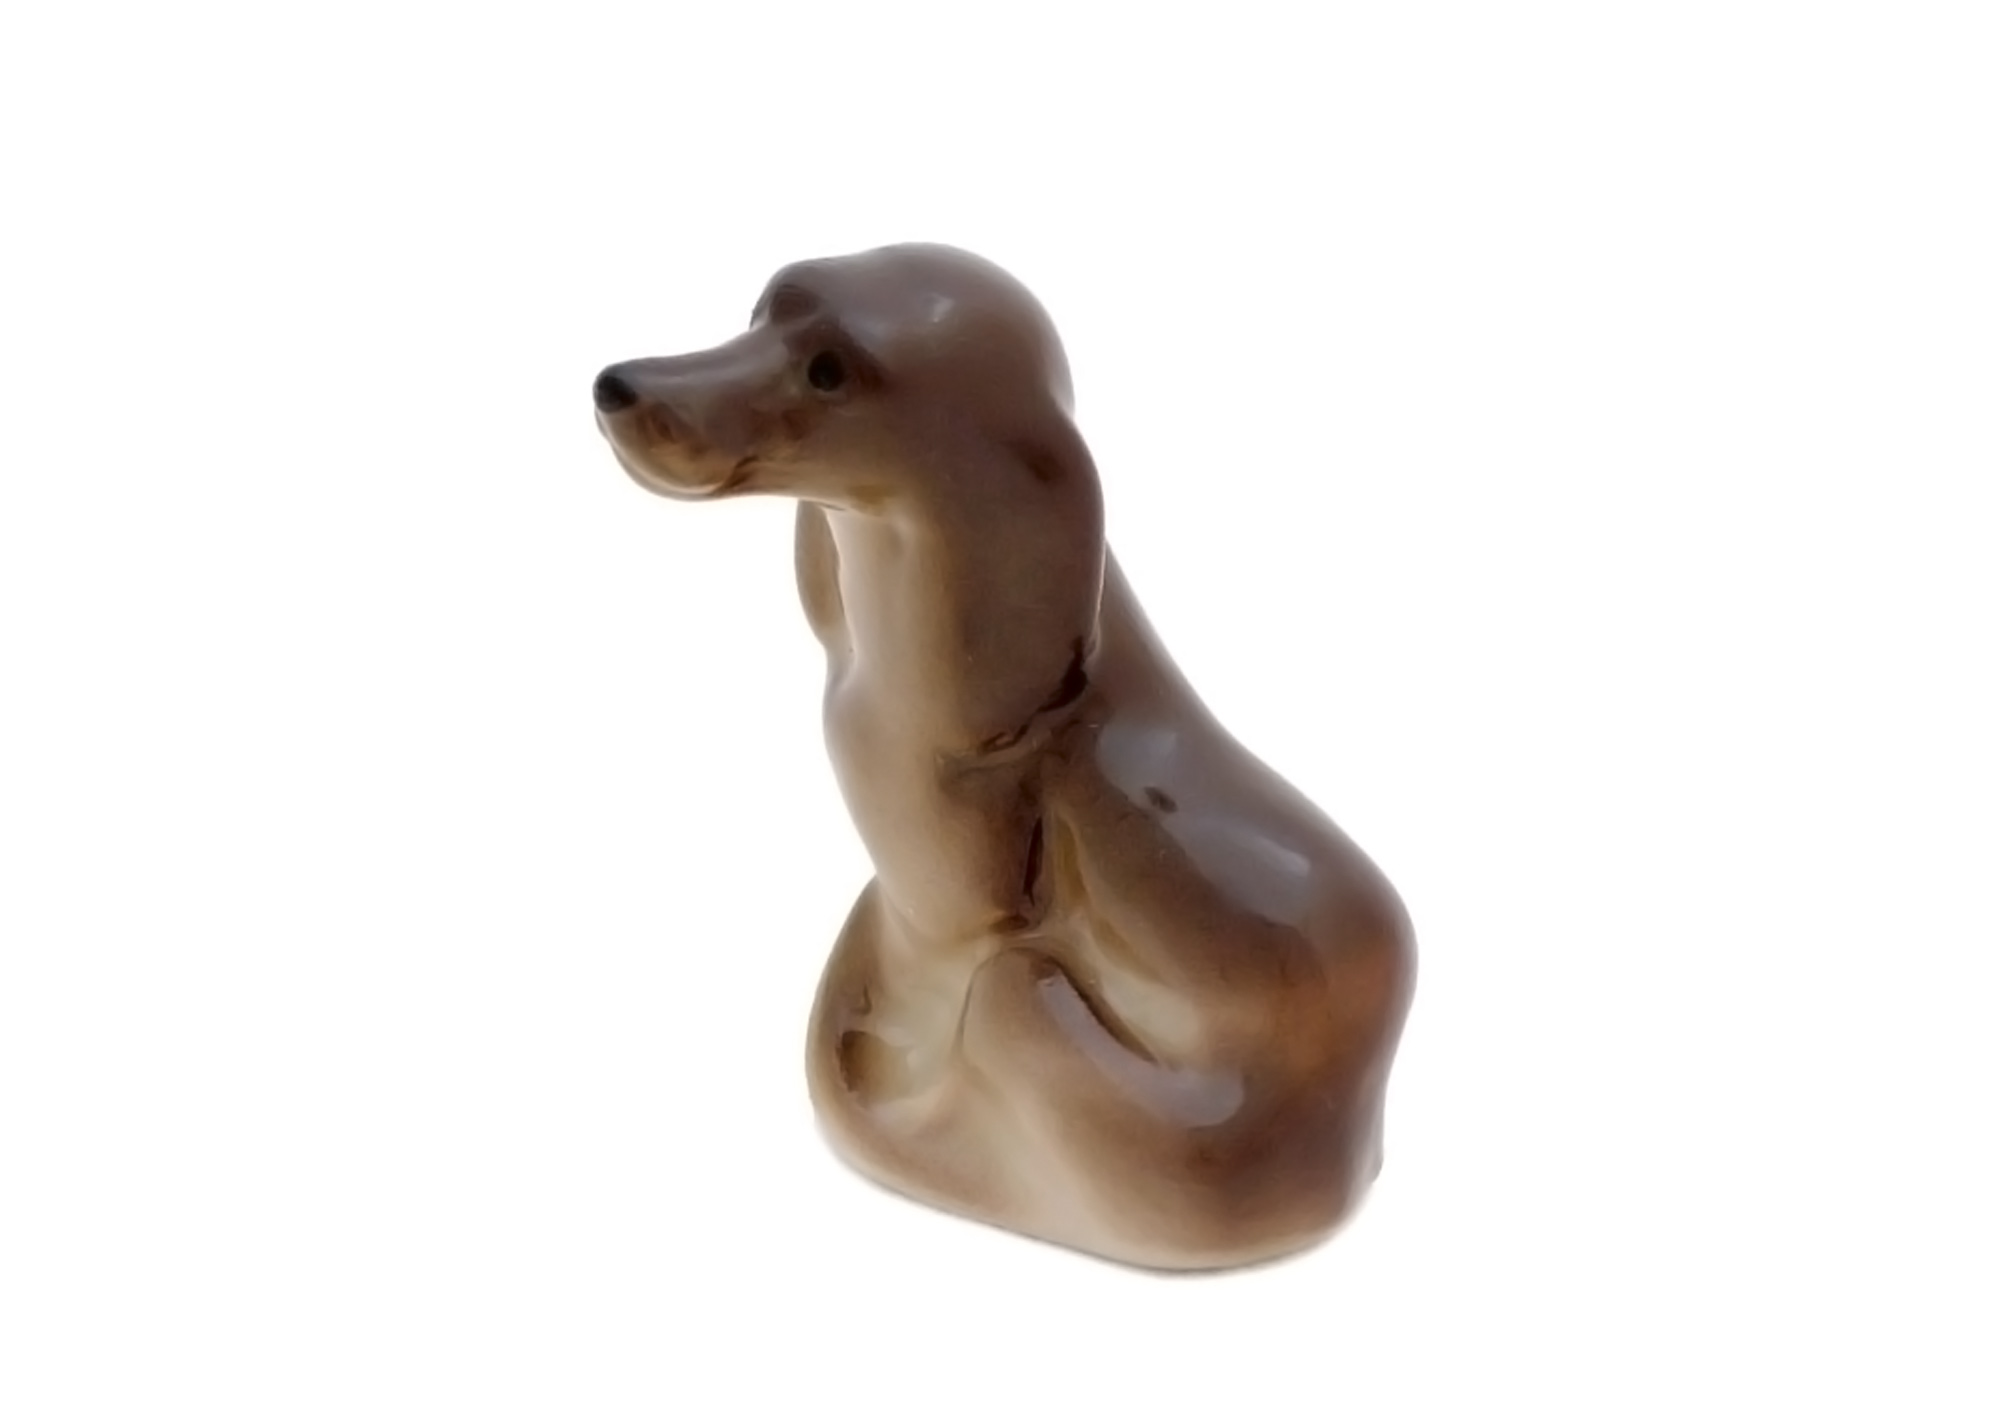 Buy Little Dachshund Dog Figurine at GoldenCockerel.com